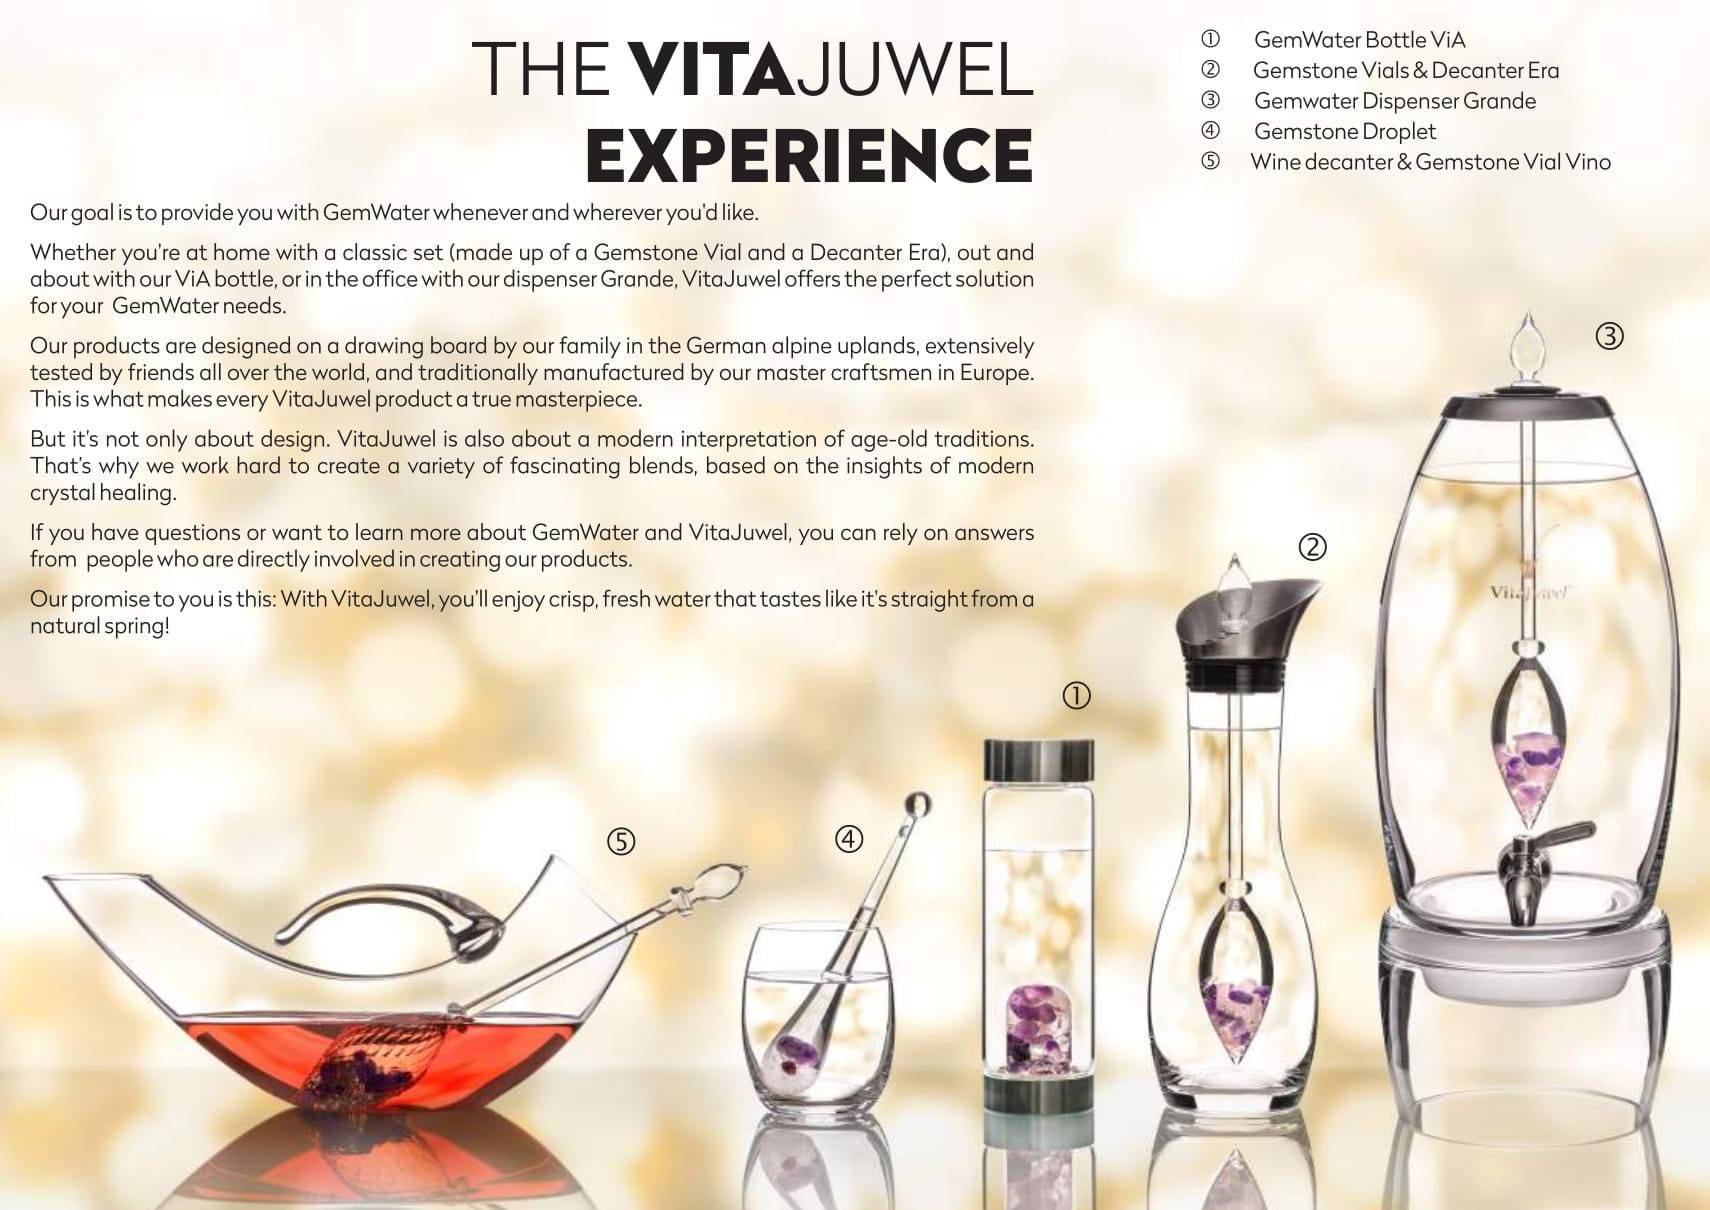 Travel Size VitaJuwel Gemstone Droplet Vial Crystal Infused Water or Wine - claritycove.com